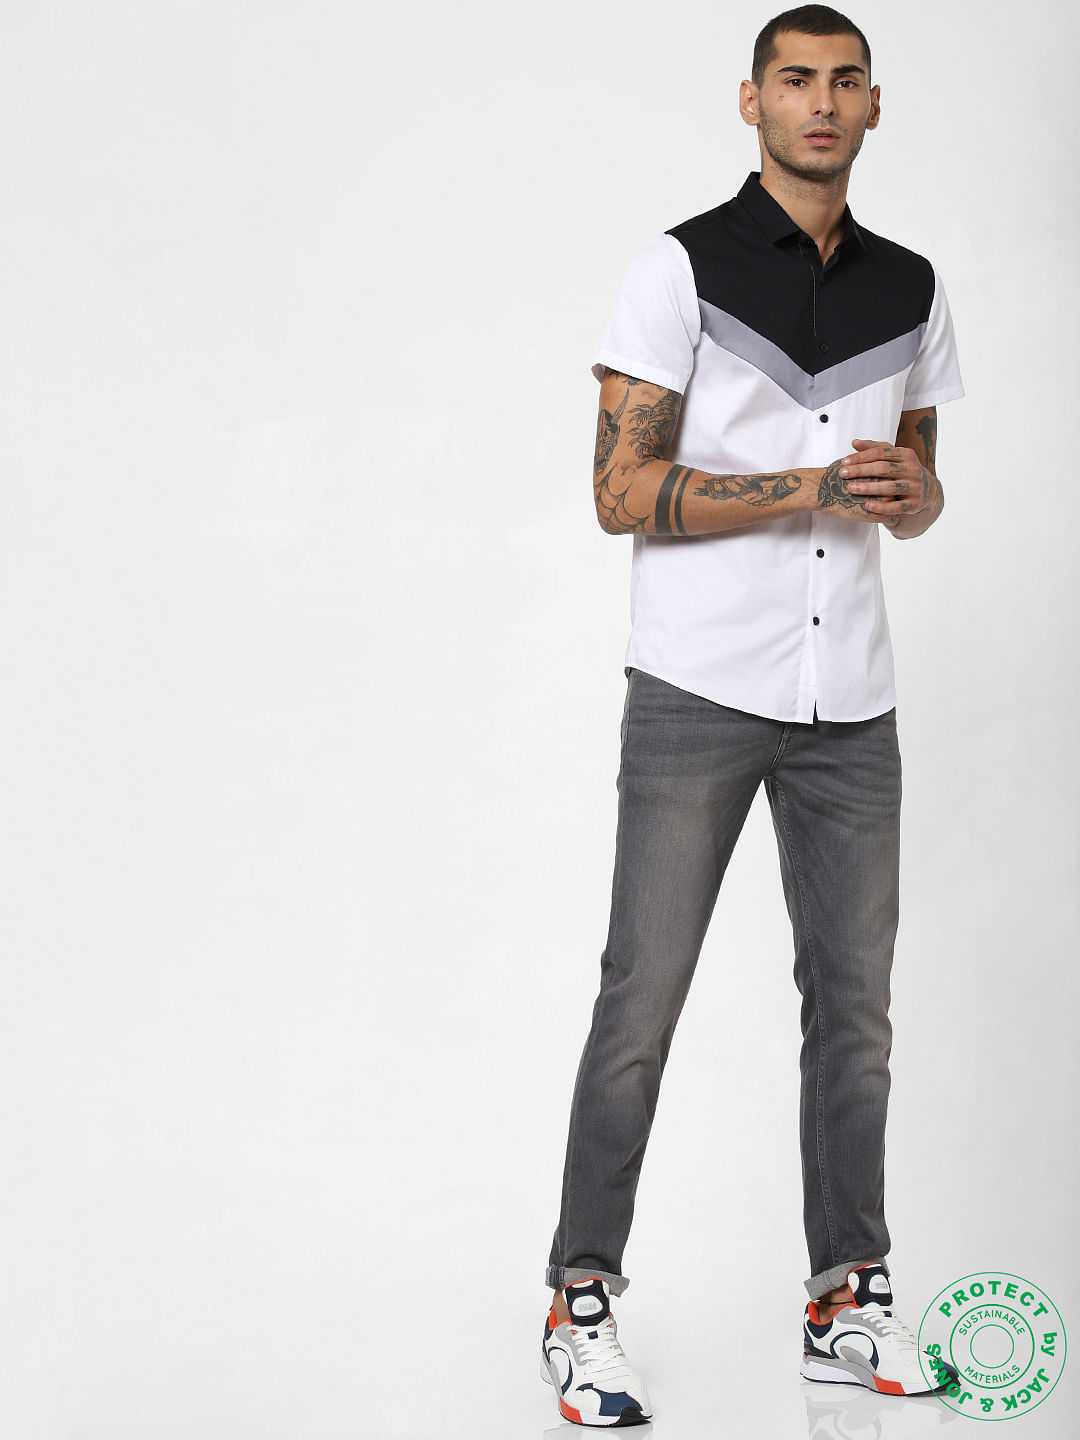 Source Formal shirts and pants combination mens short sleeve shirts dress  shirt for man on malibabacom